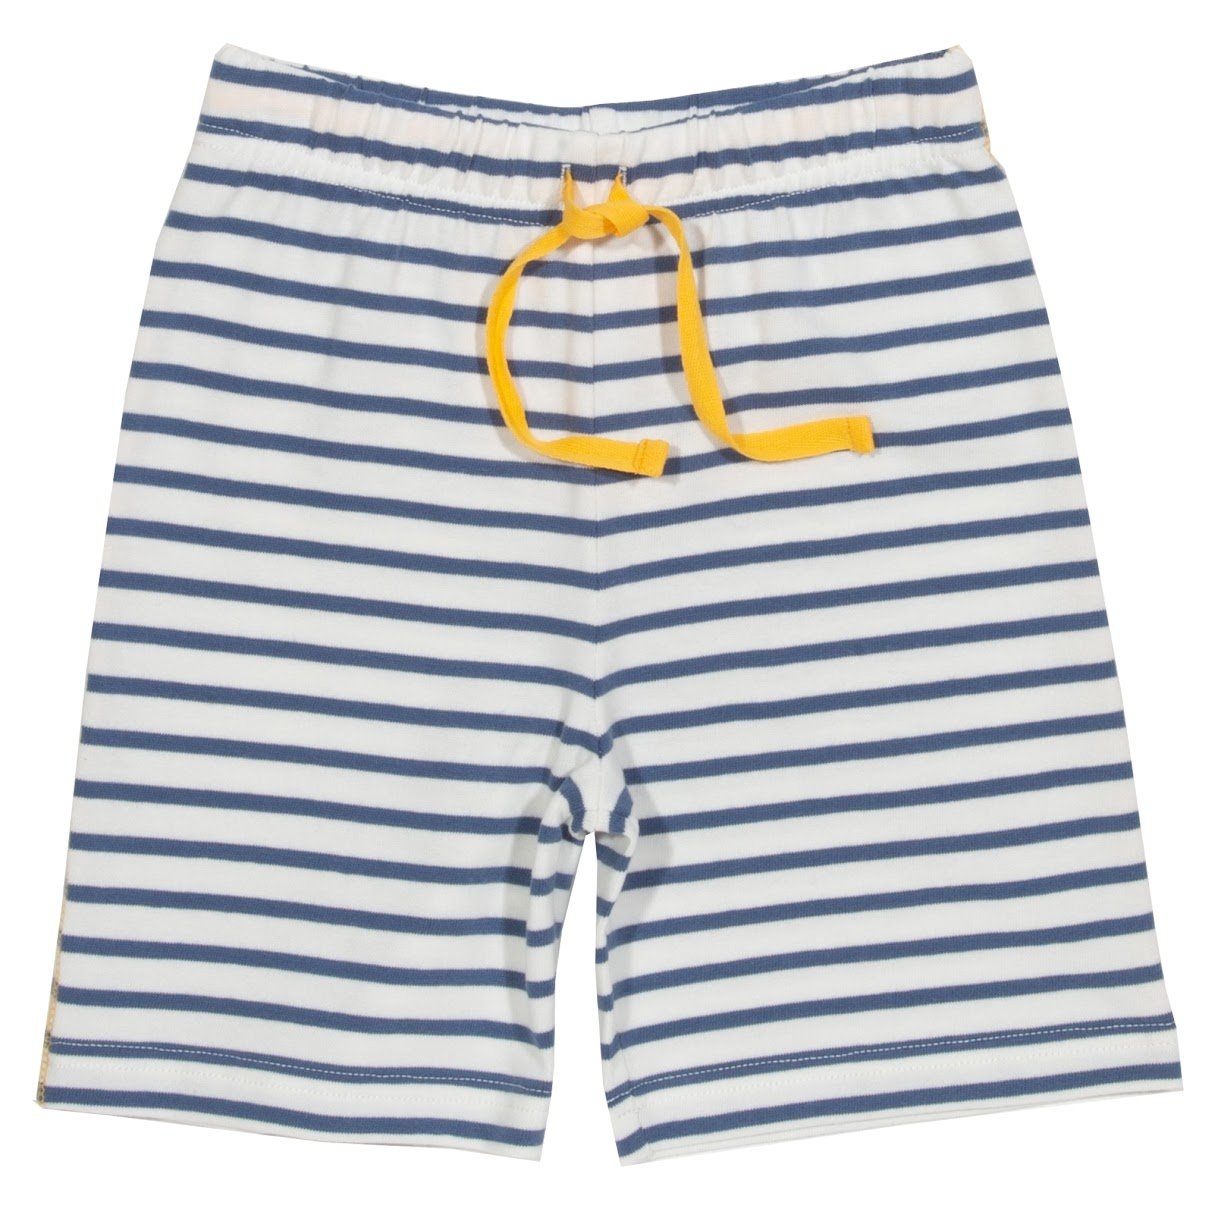 Kite Toddler Mini Corfe Organic Cotton Shorts – Blue and White Stripe – 18-24 months